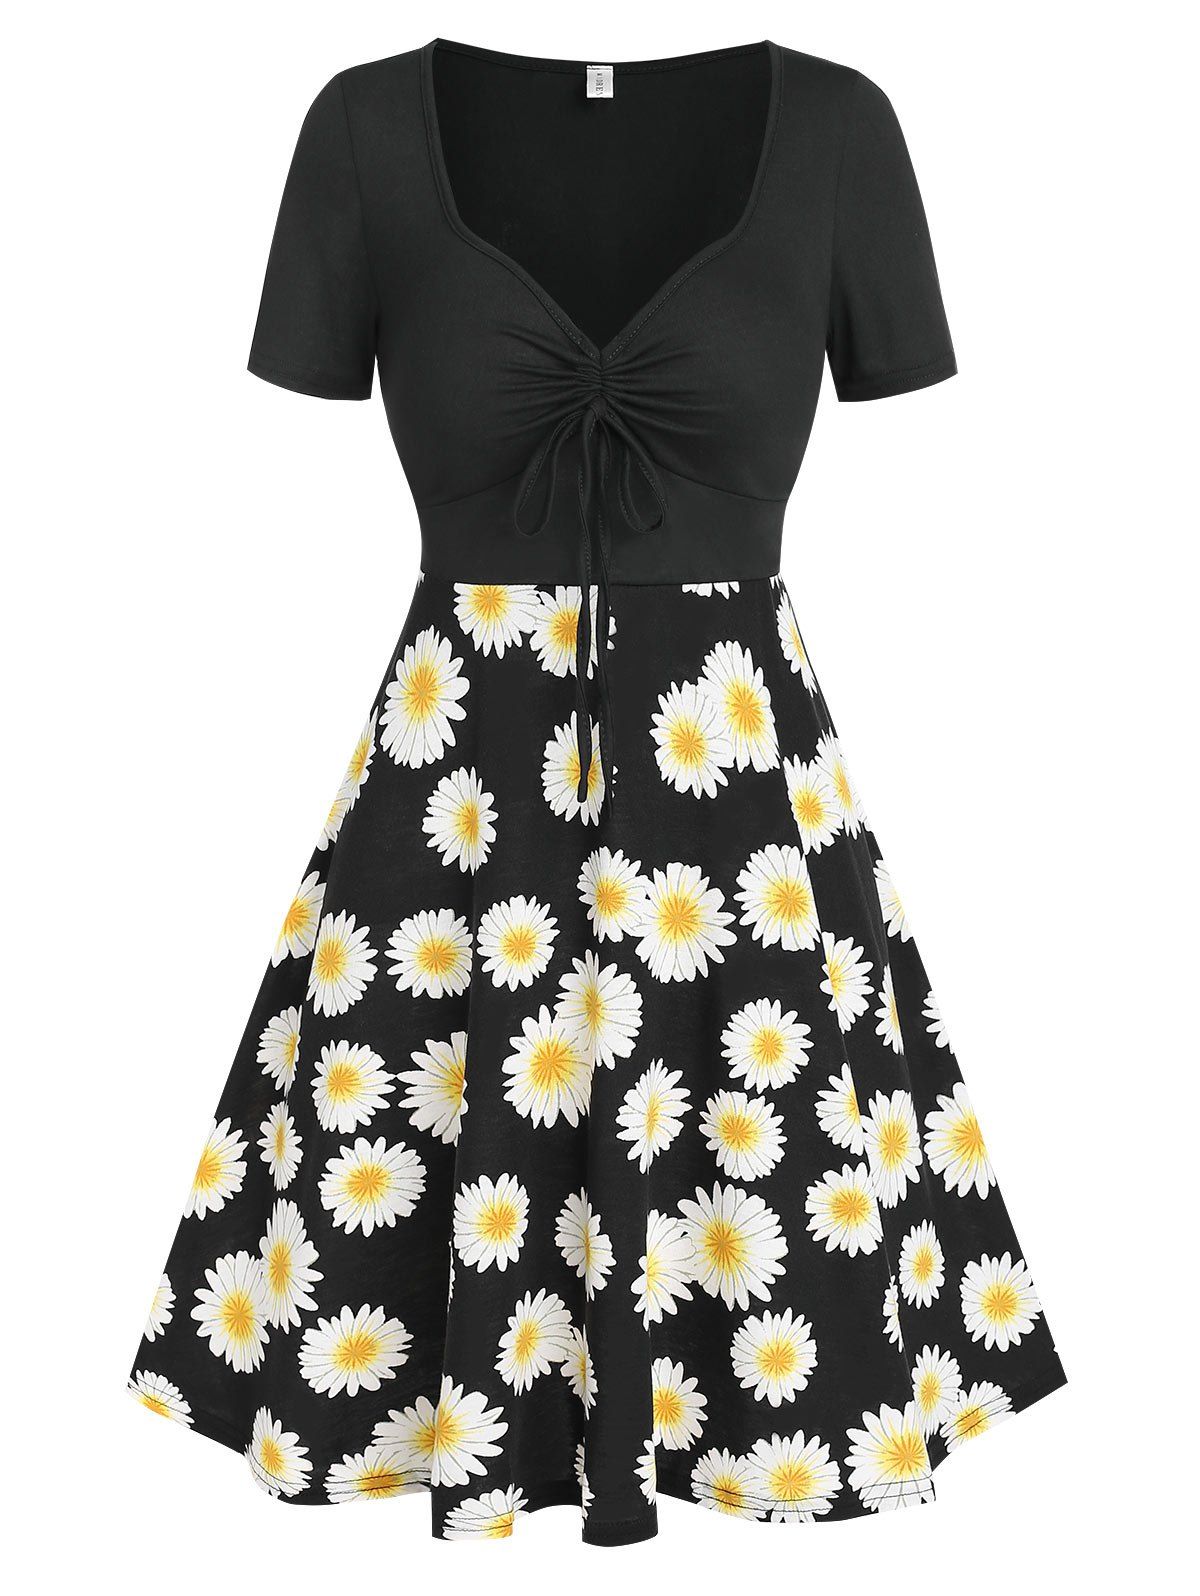 Printed Floral Corset Style Drawstring High Waist A Line Dress - LIGHT YELLOW S